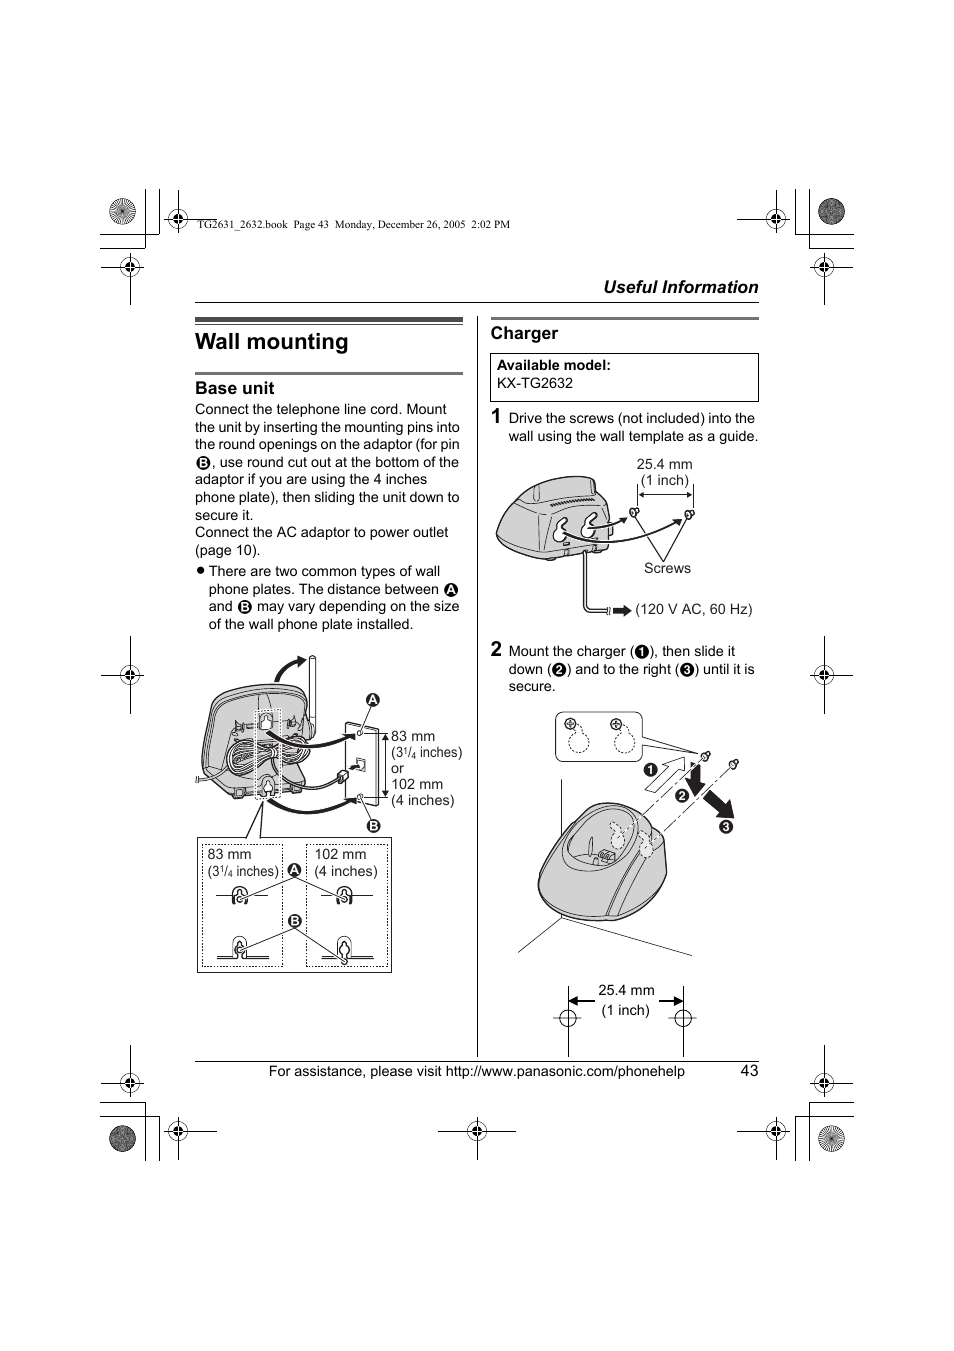 Useful information, Wall mounting | Panasonic 2.4 GHz Digital Cordless